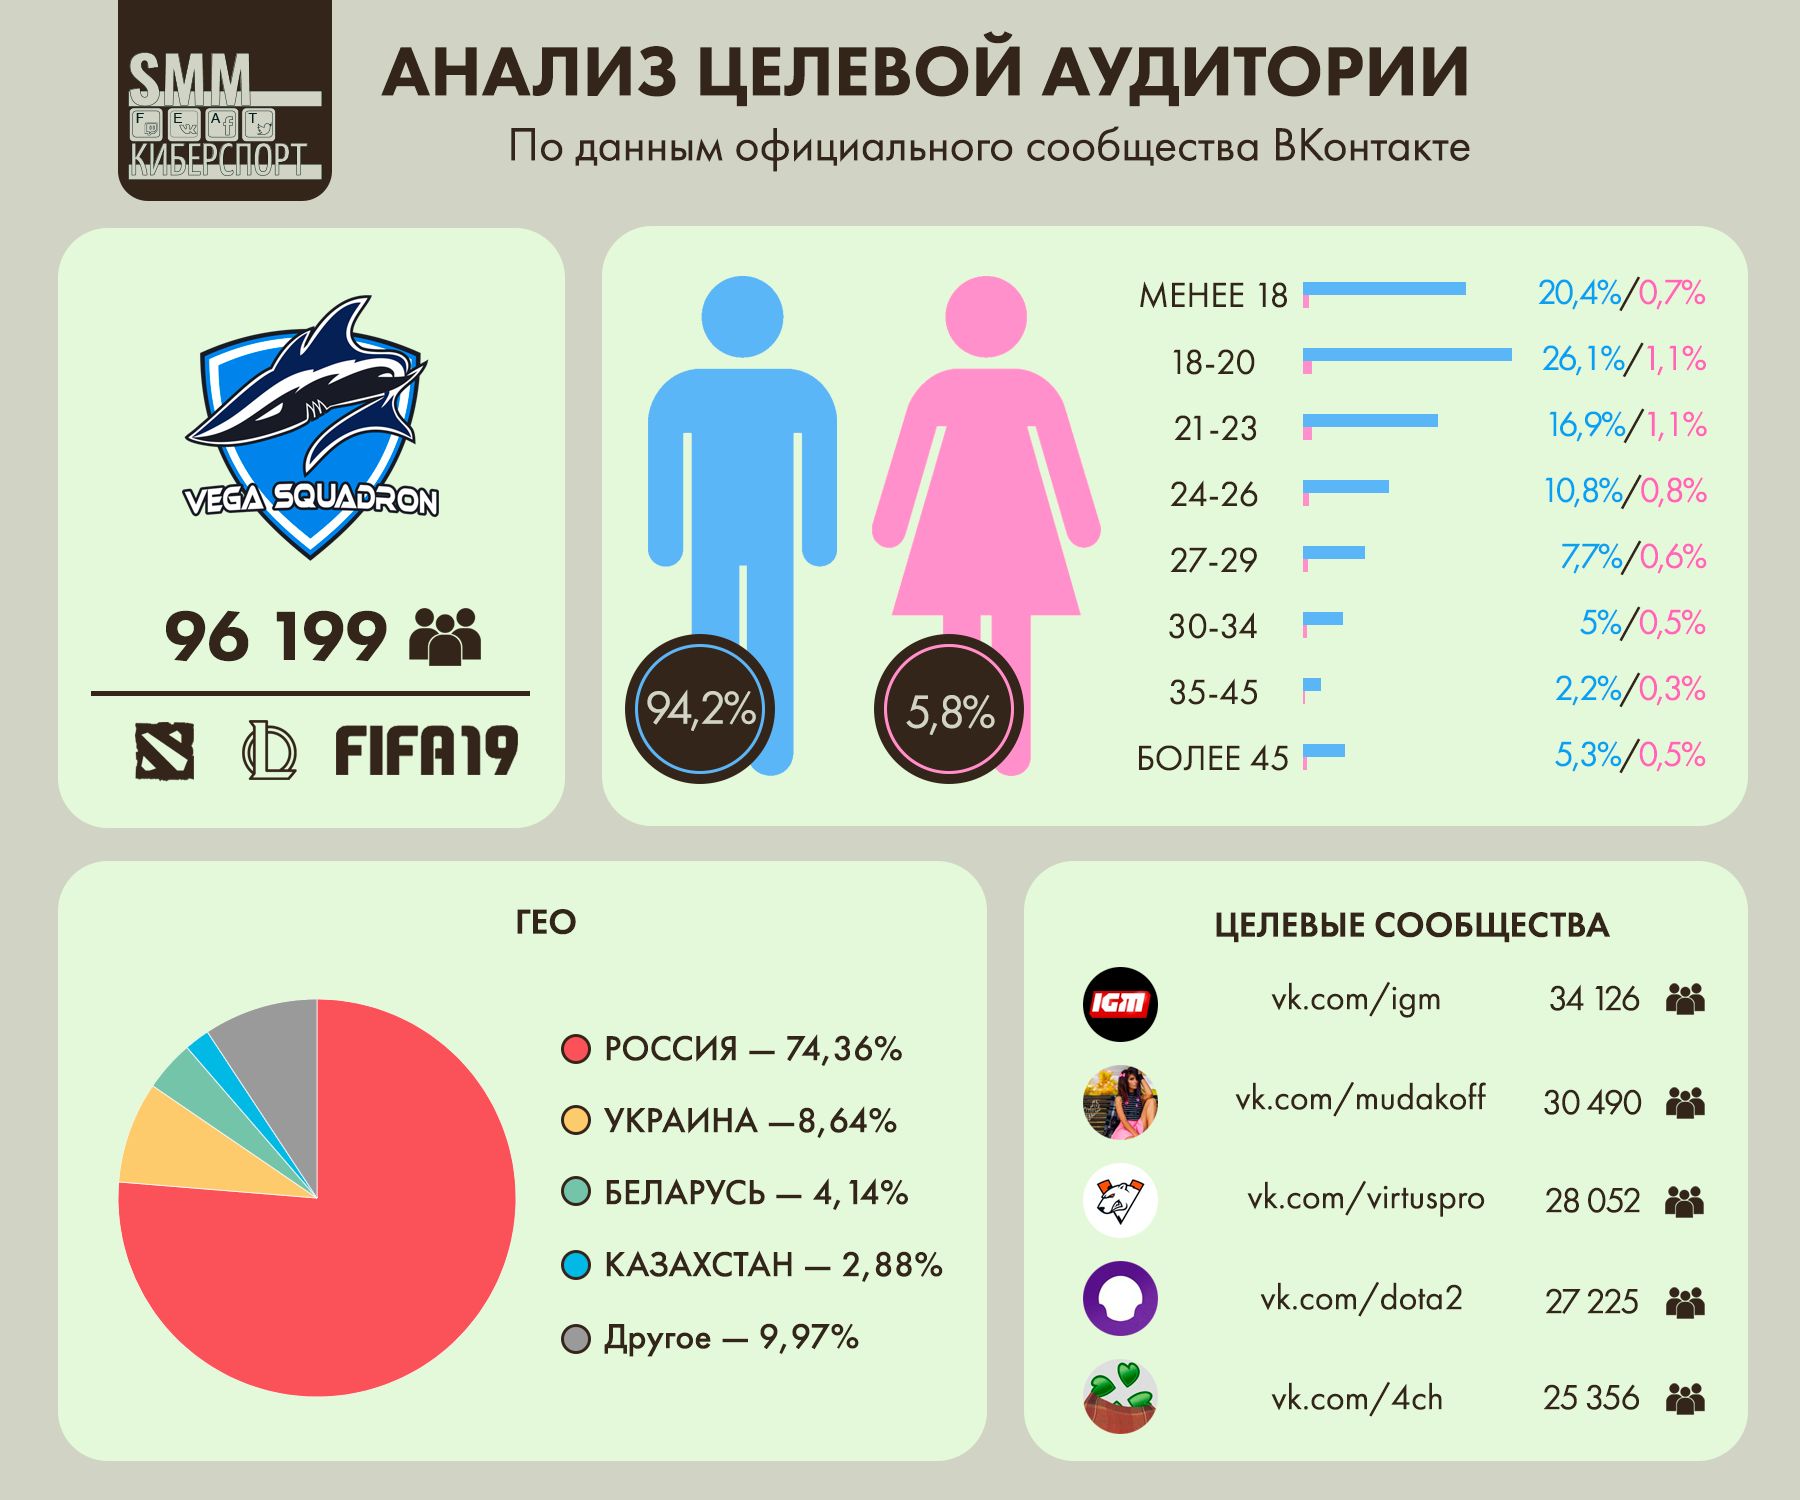 Анализ целевой аудитории ВКонтакте киберспортивного клуба Vega Squadron